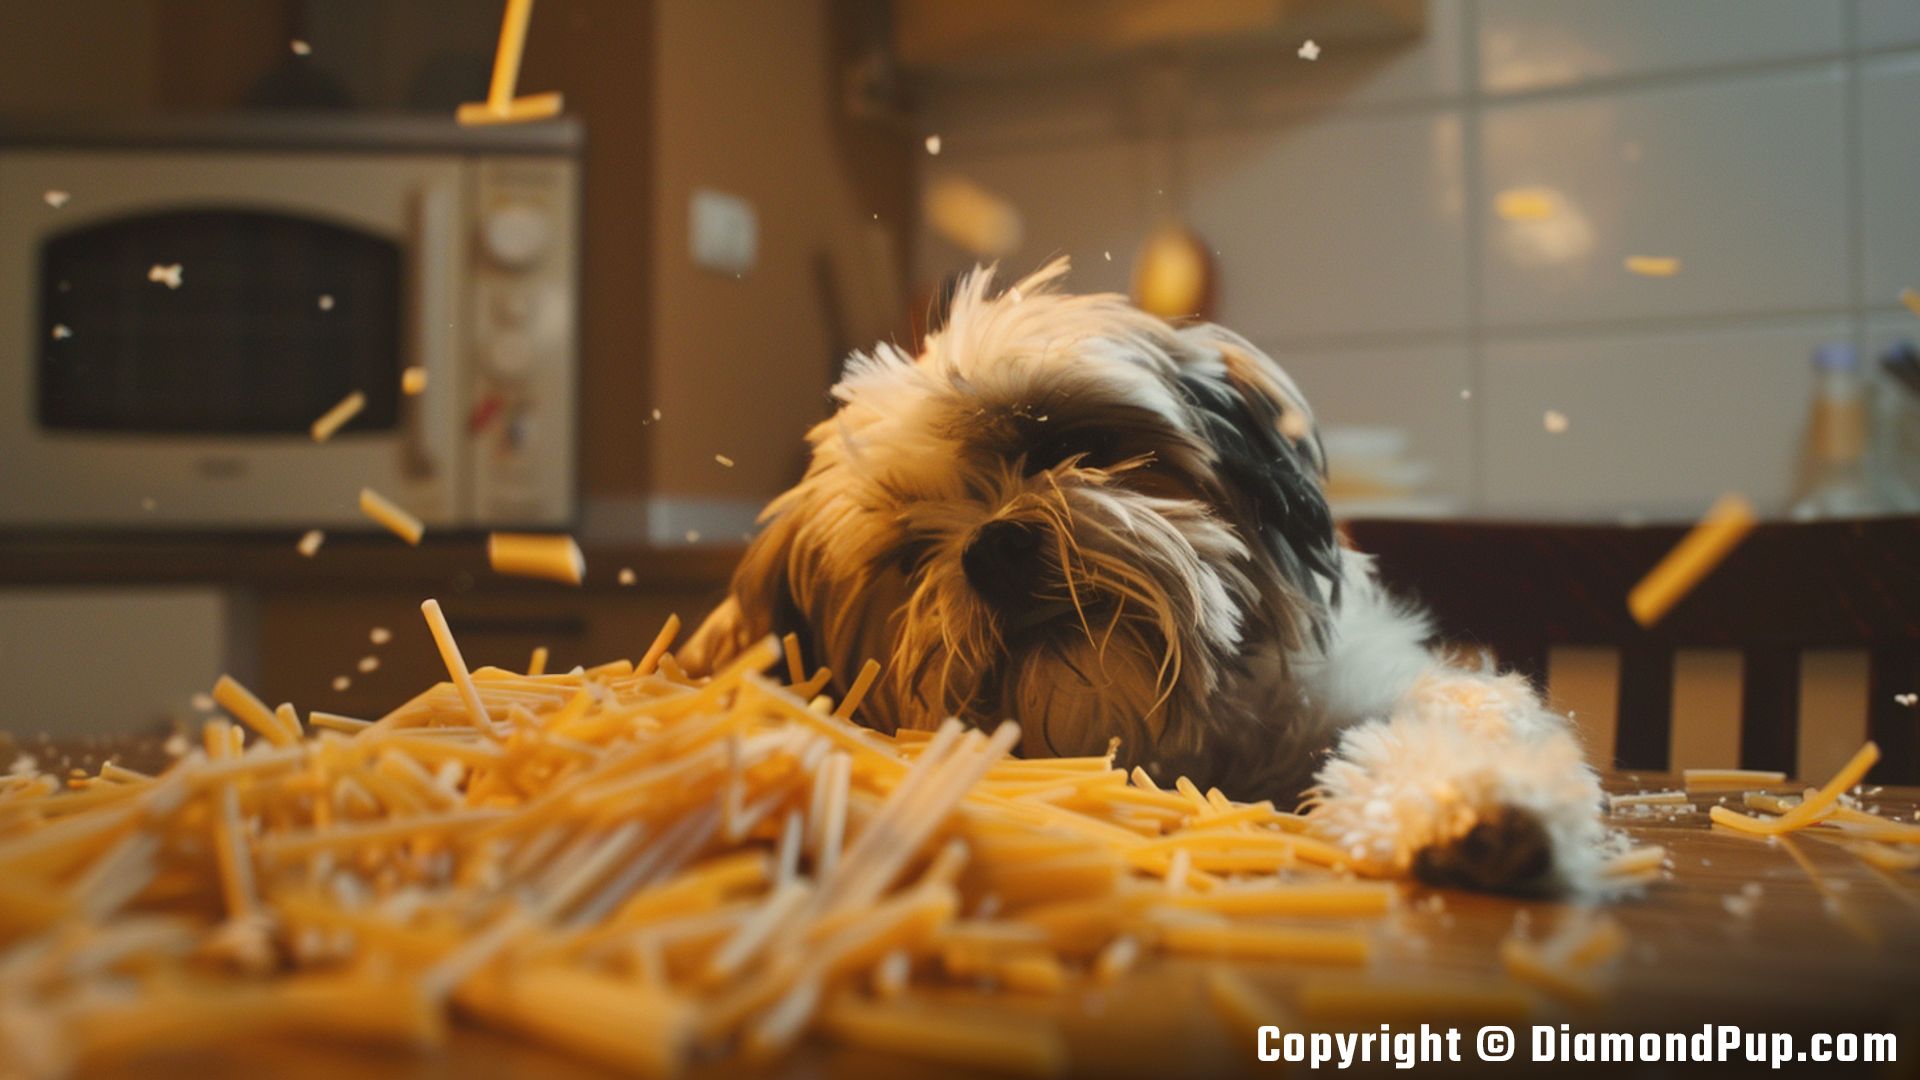 Image of a Playful Shih Tzu Eating Pasta